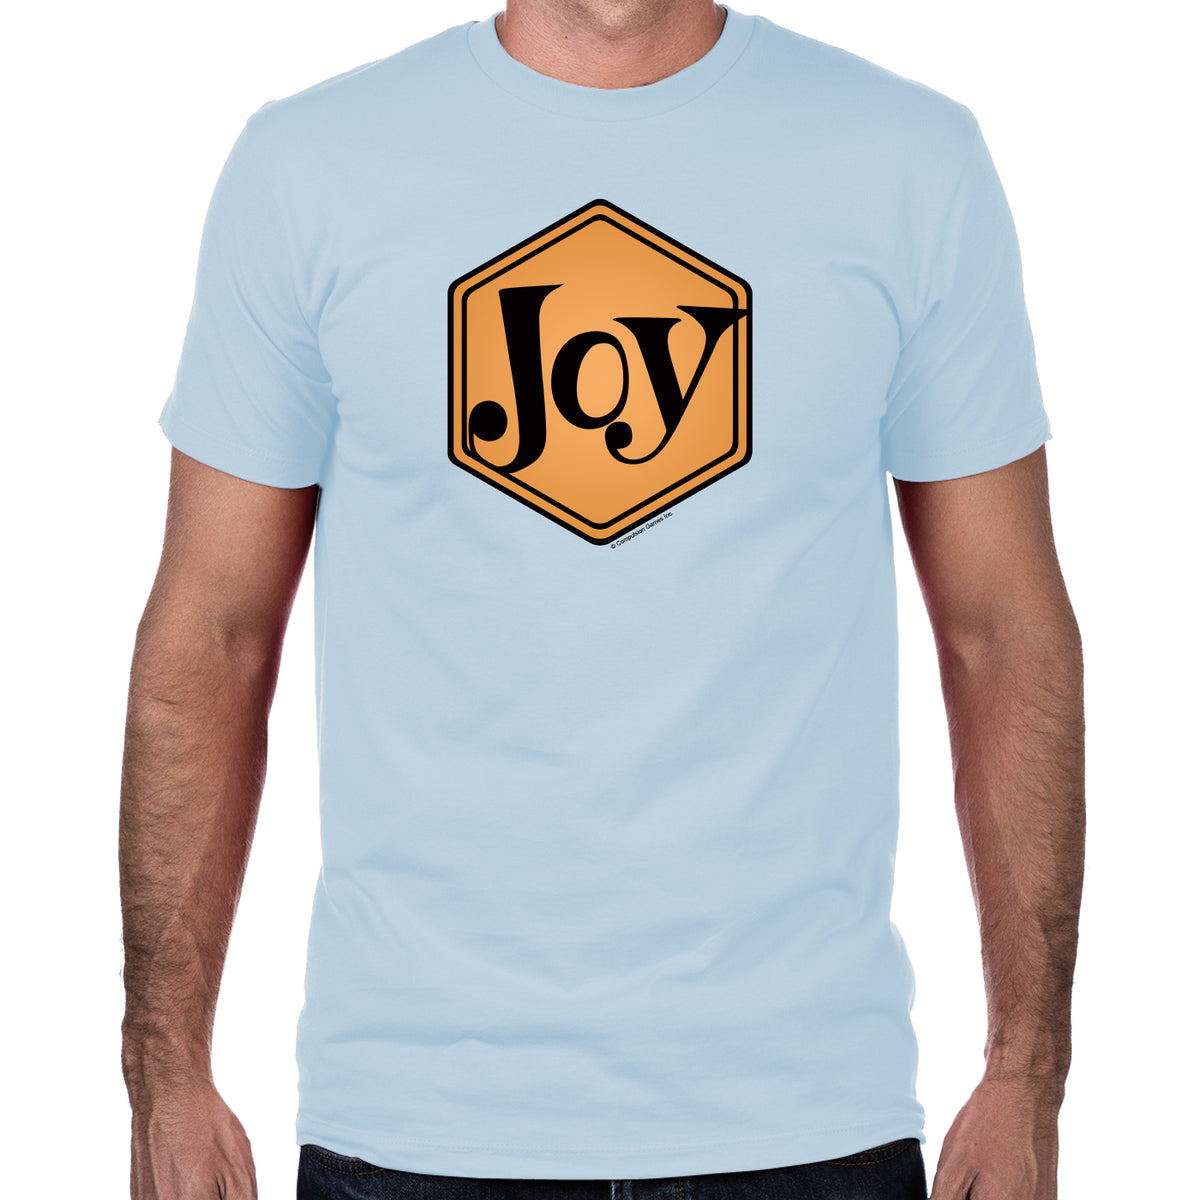 Joy Men's Fitted T-Shirt